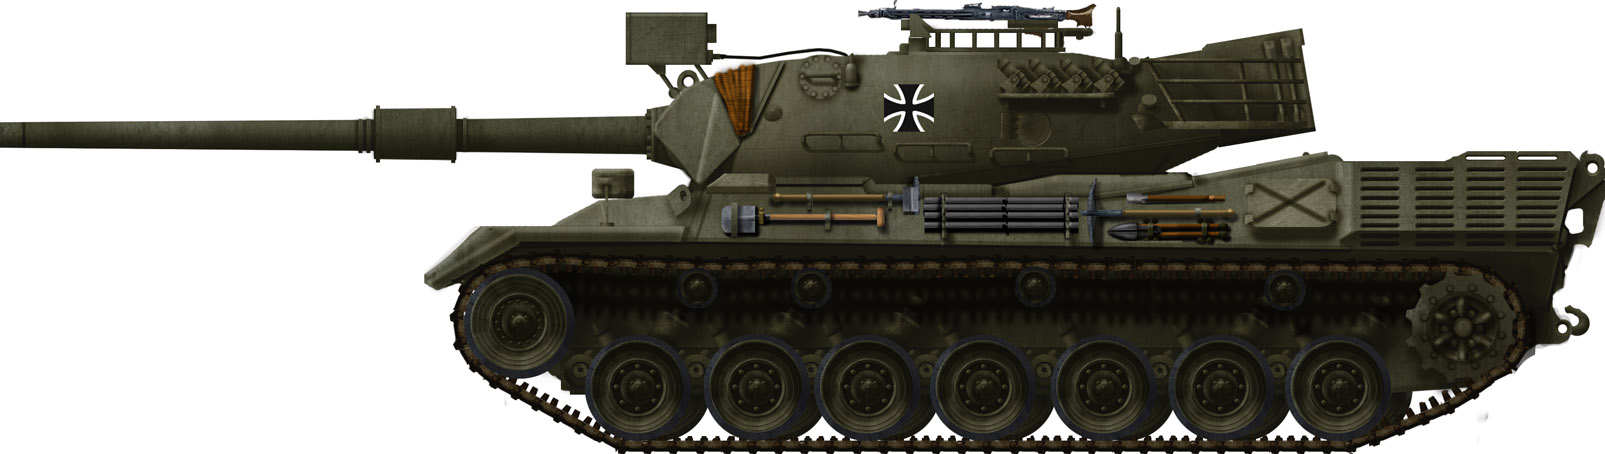 Leopard-I-1965.jpg